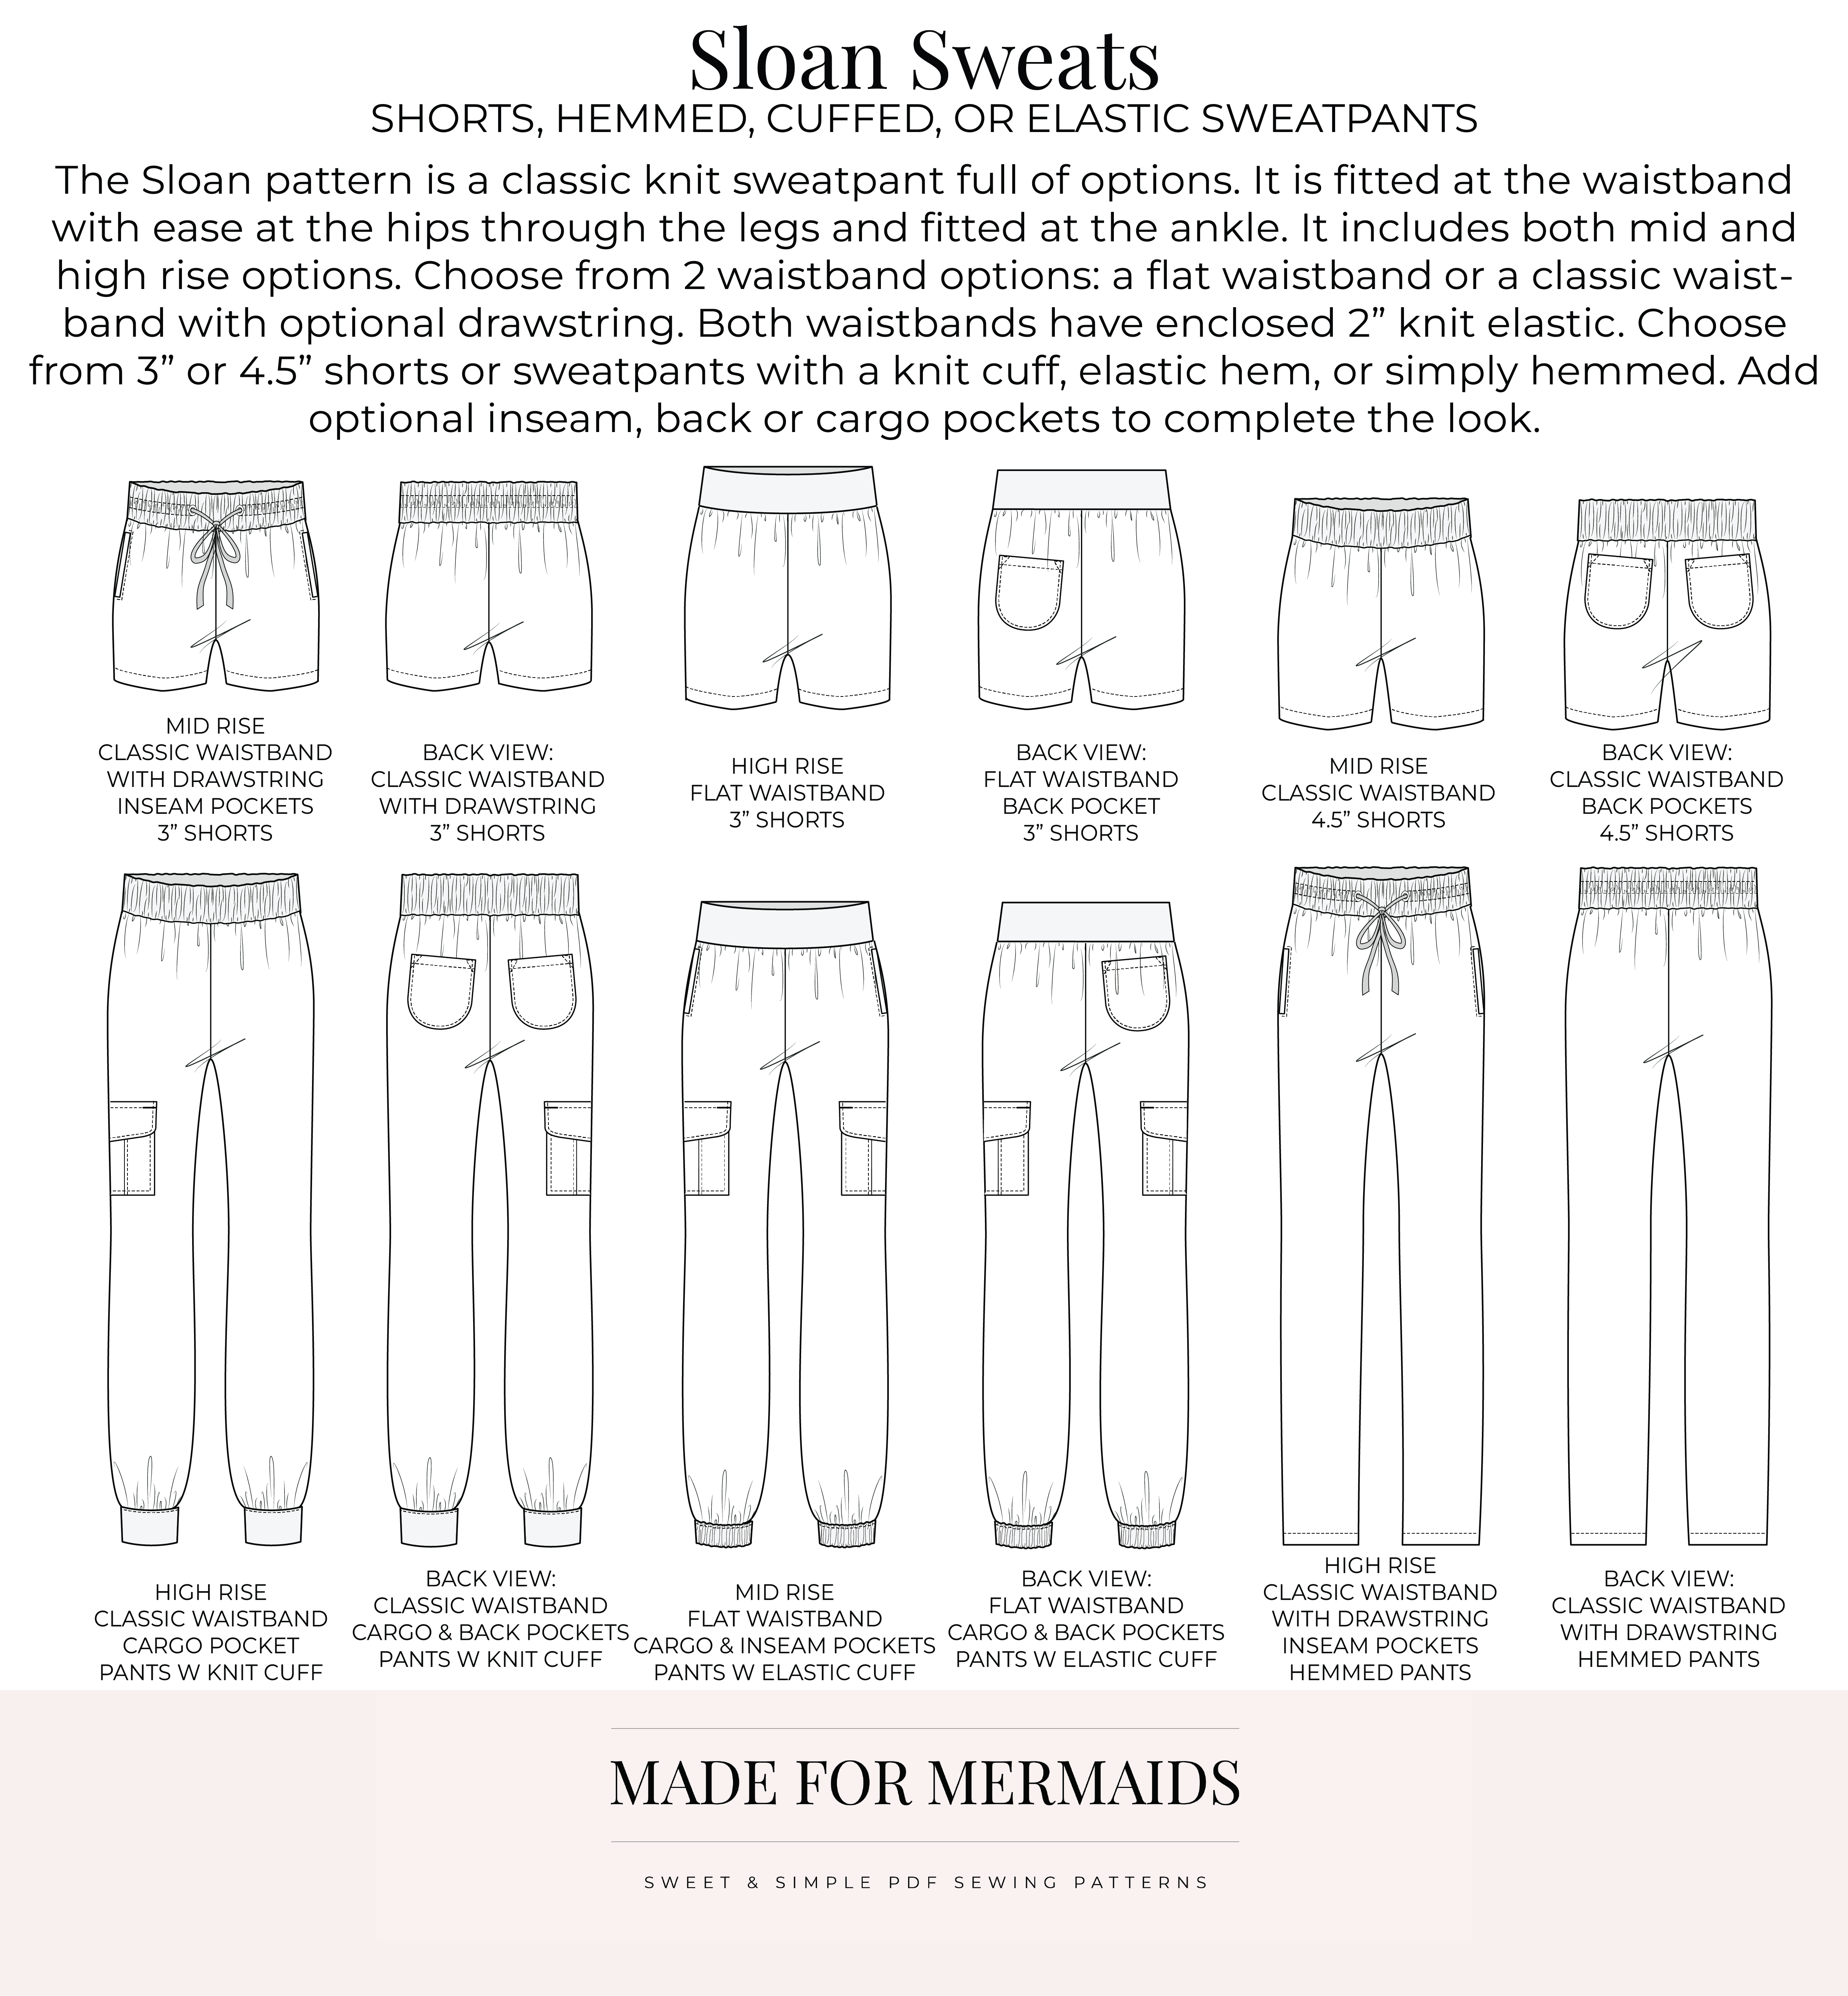 Sloan Sweats: Shorts, Hemmed, Cuffed, or Elastic Sweatpants